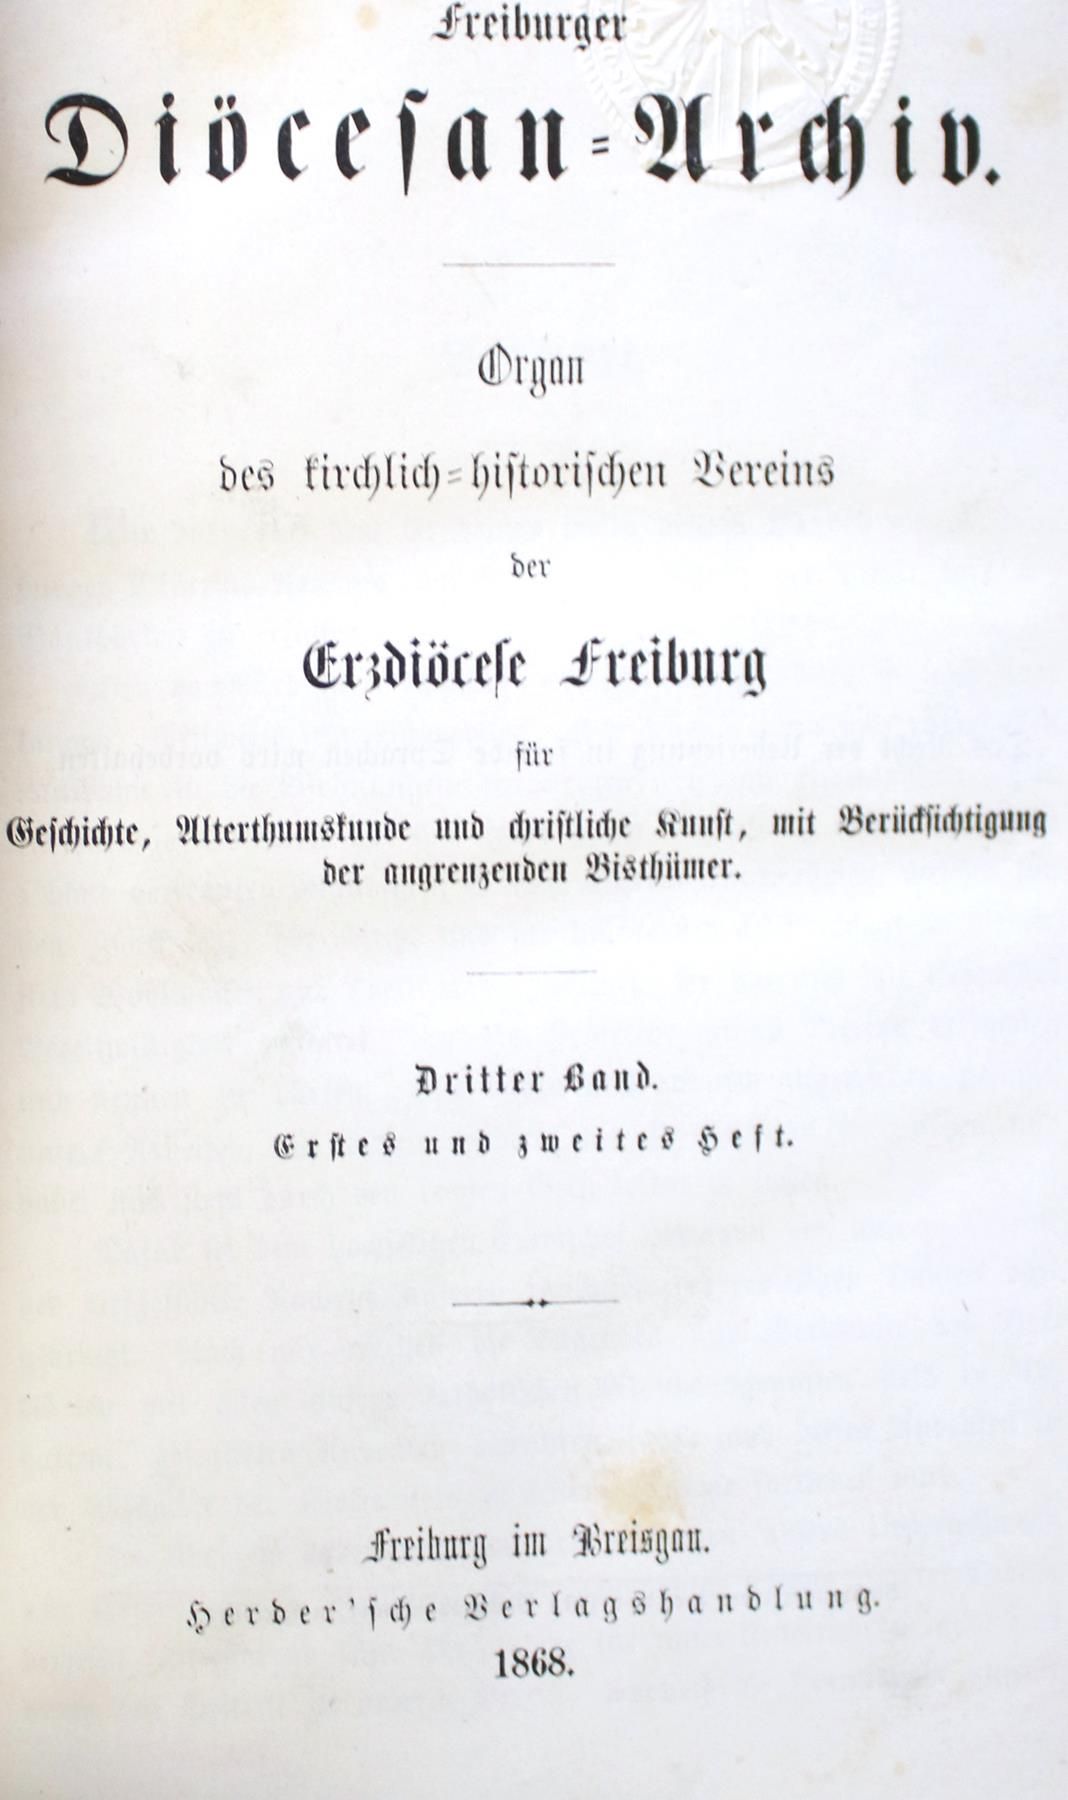 Freiburger Diöcesan-Archiv. Organ of the ecclesiastical-historical association o&hellip;